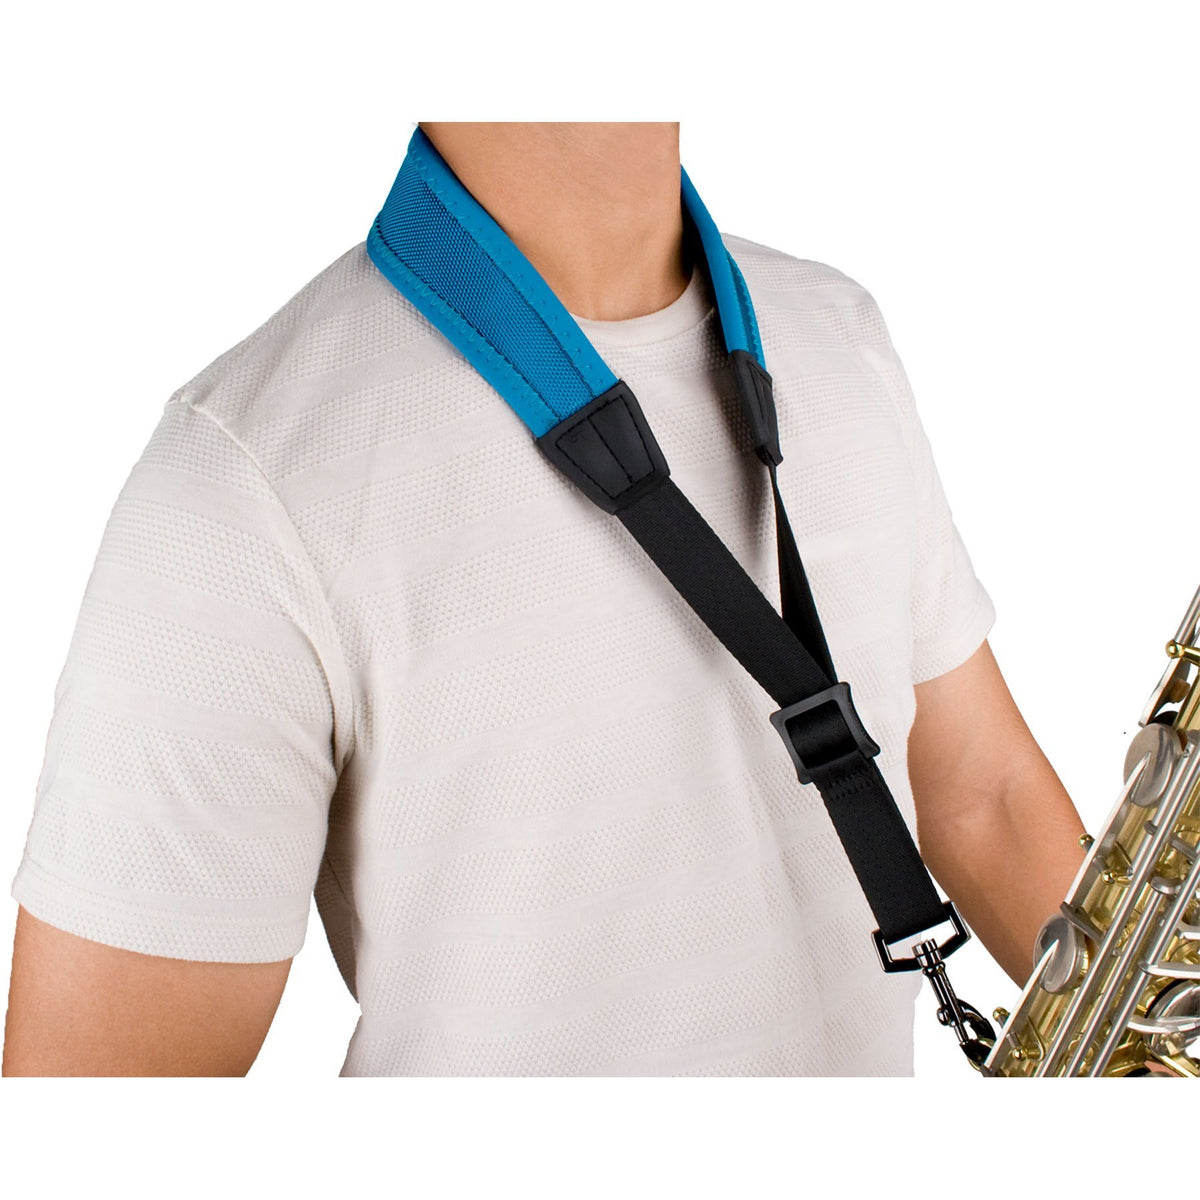 Protec - 22â€³ (Regular) Ballistic Neoprene Less-Stress Saxophone Neck Strap-Accessories-Protec-Teal Blue-Music Elements